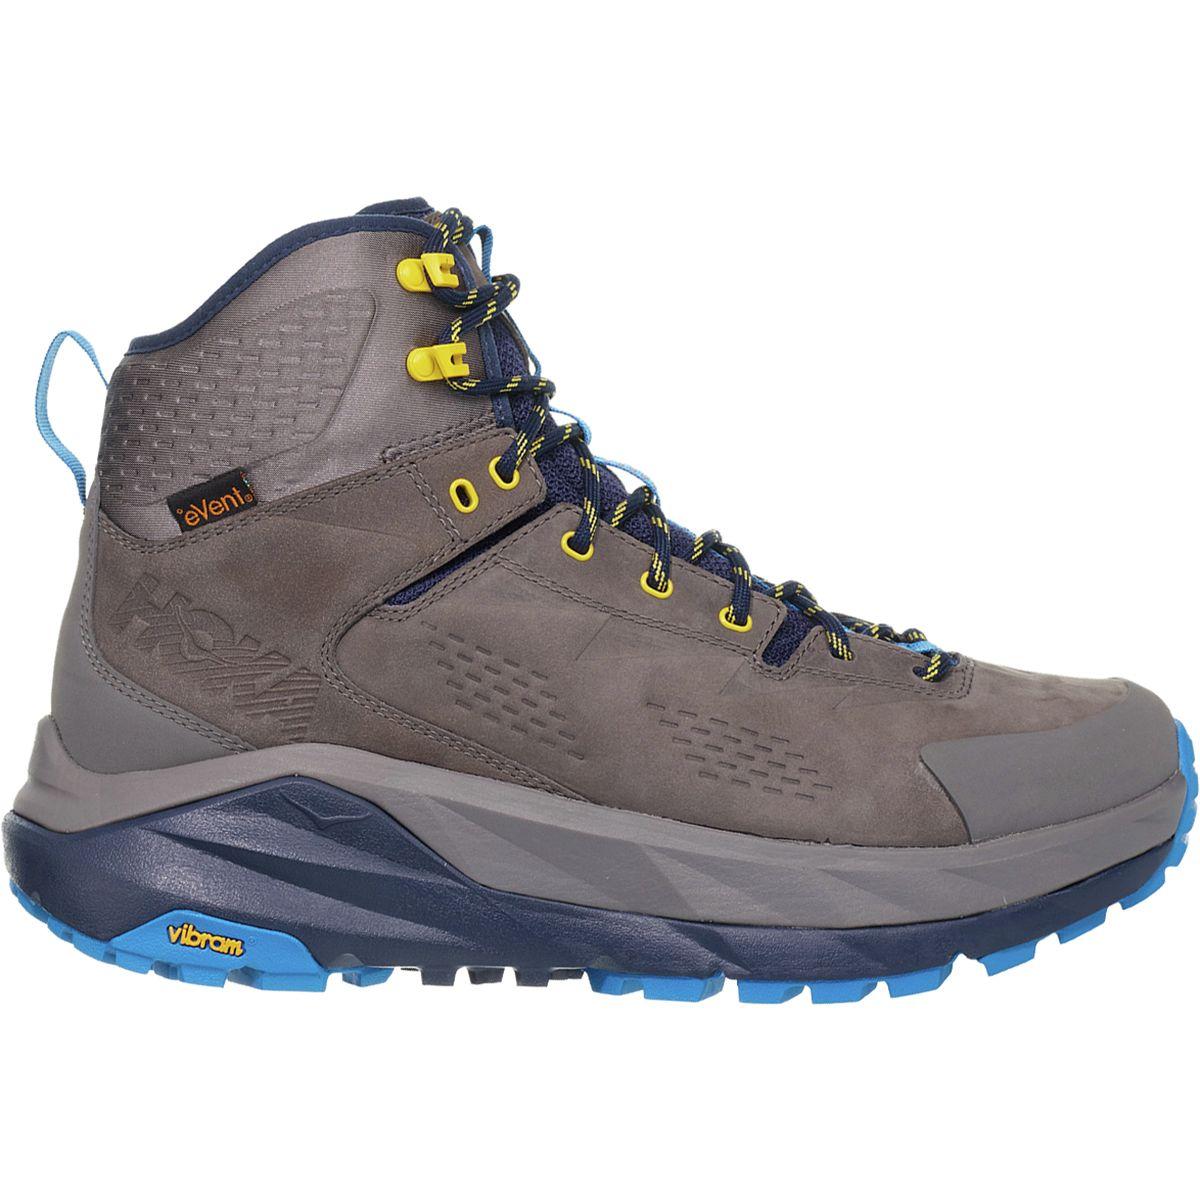 Hoka One One Leather Sky Kaha Hiking Boot in Charcoal Grey/Blue (Gray ...